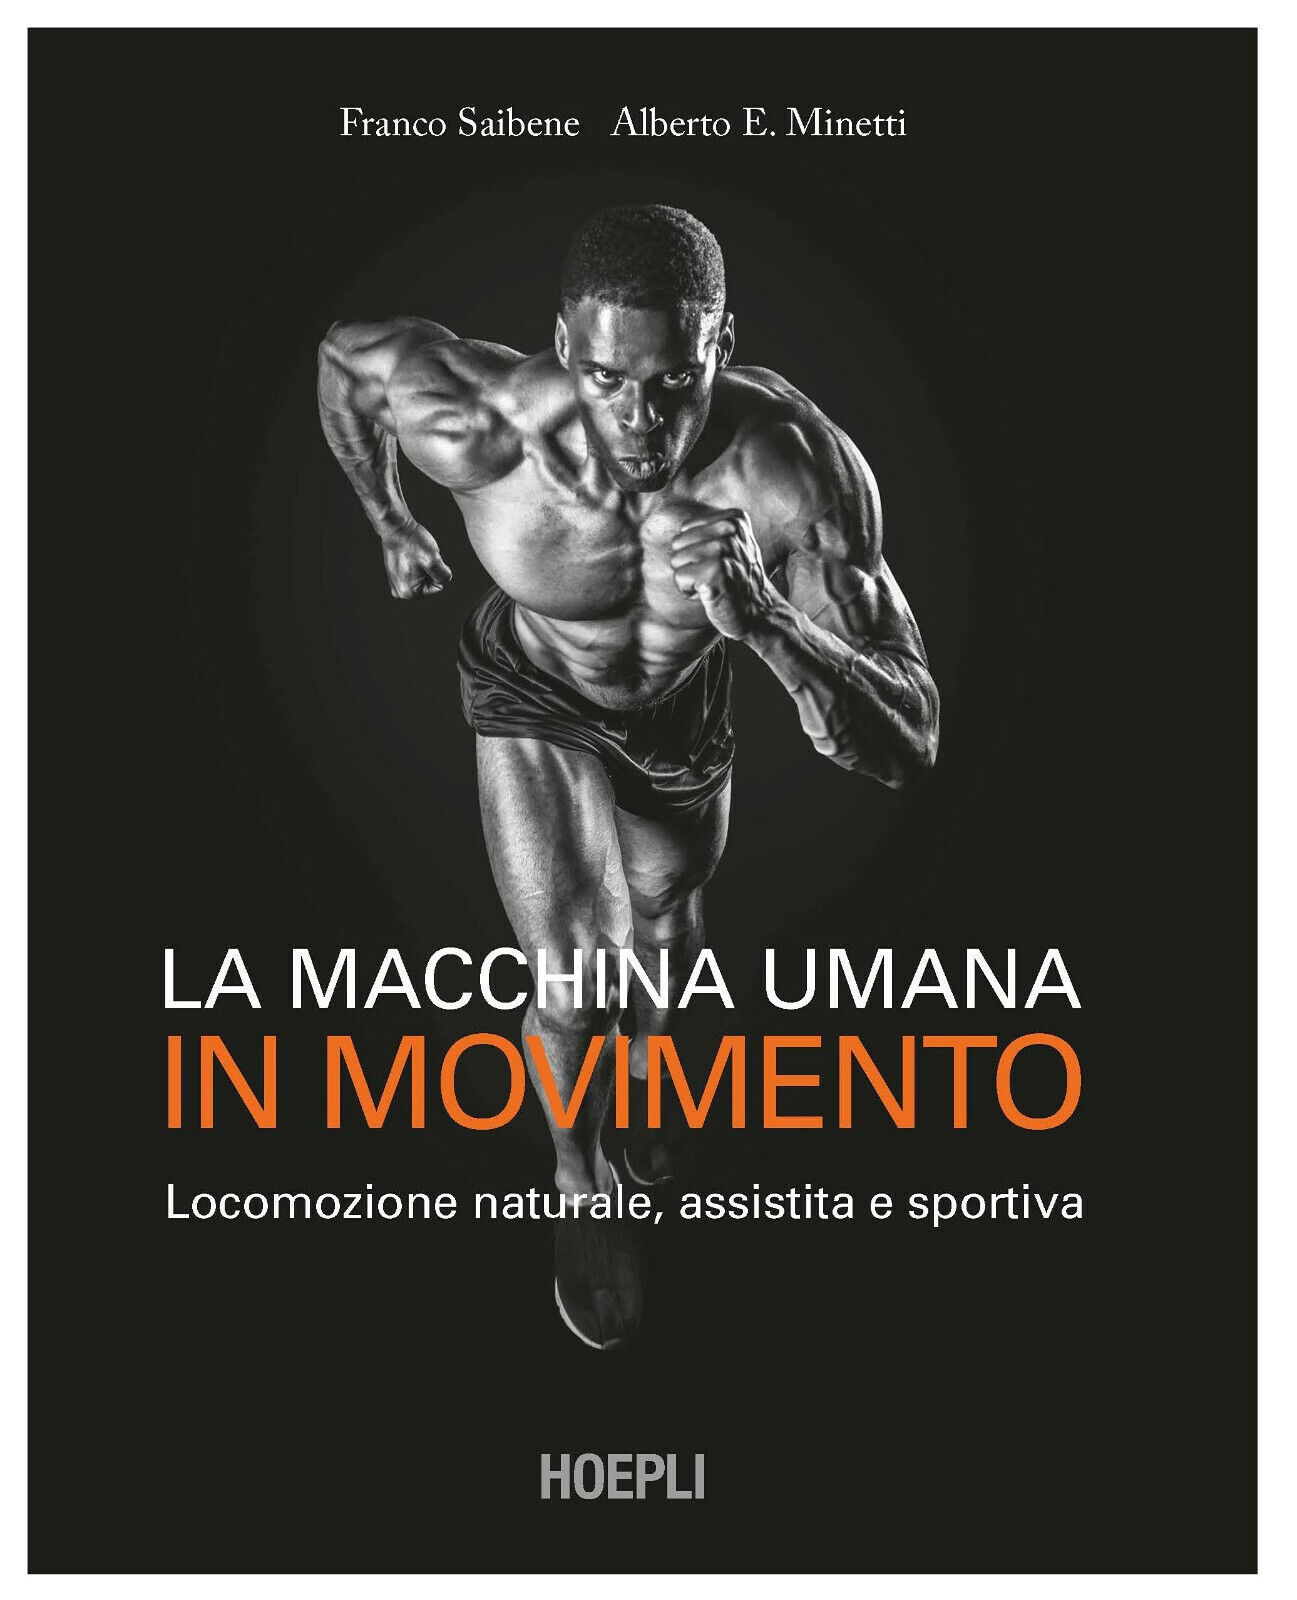 La macchina umana in movimento - Franco Saibene, Alberto E. Minetti -hoepli,2021 libro usato